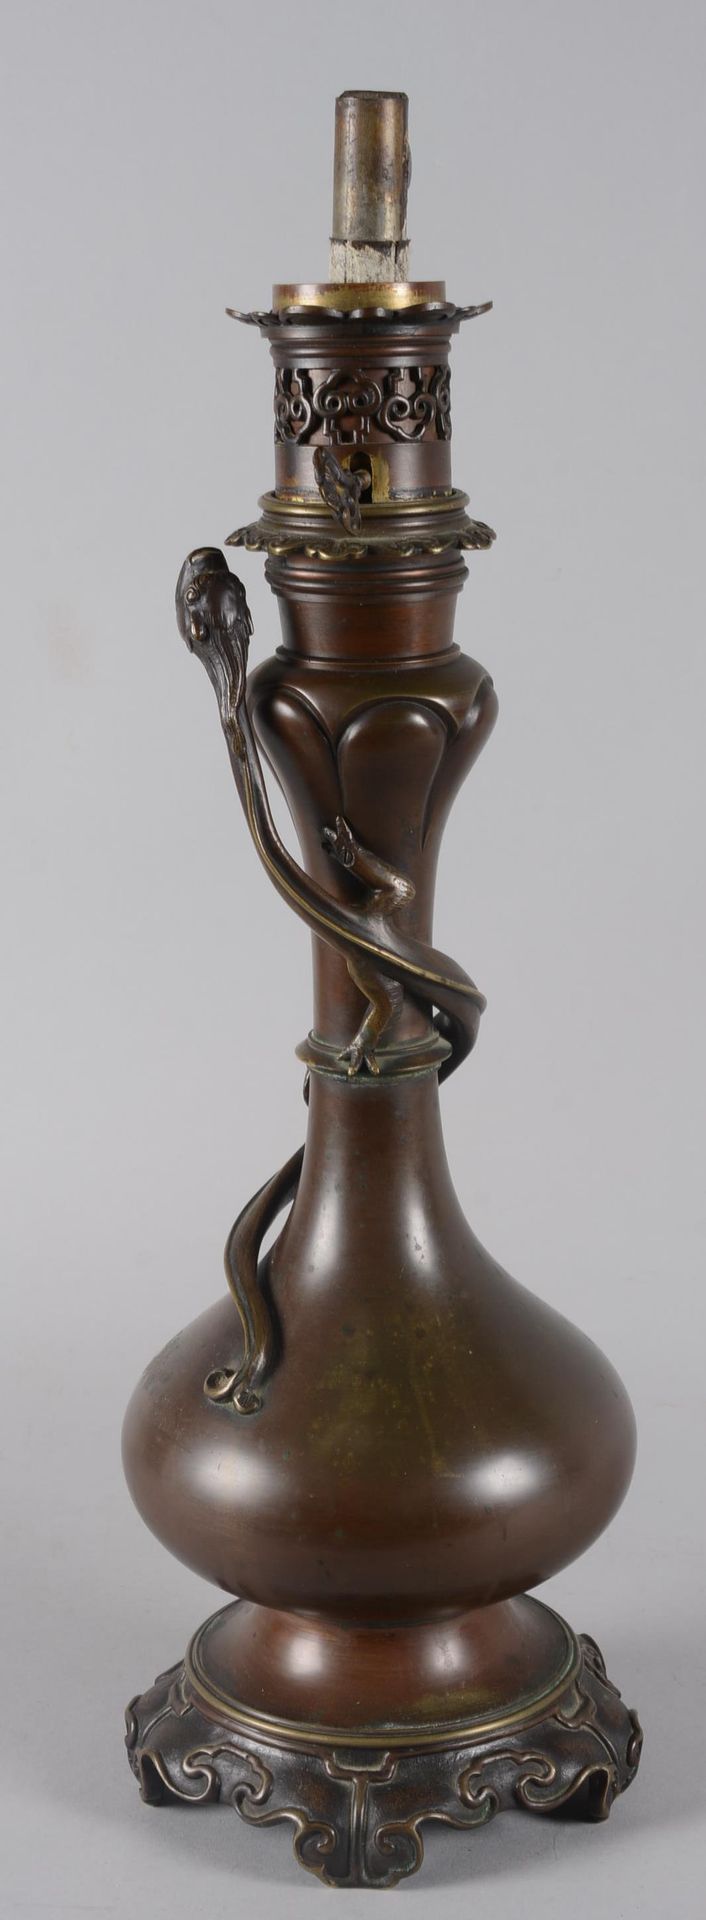 Lampe en bronze à décor d'un lézard GIAPPONE.

Lampada di bronzo decorata con un&hellip;